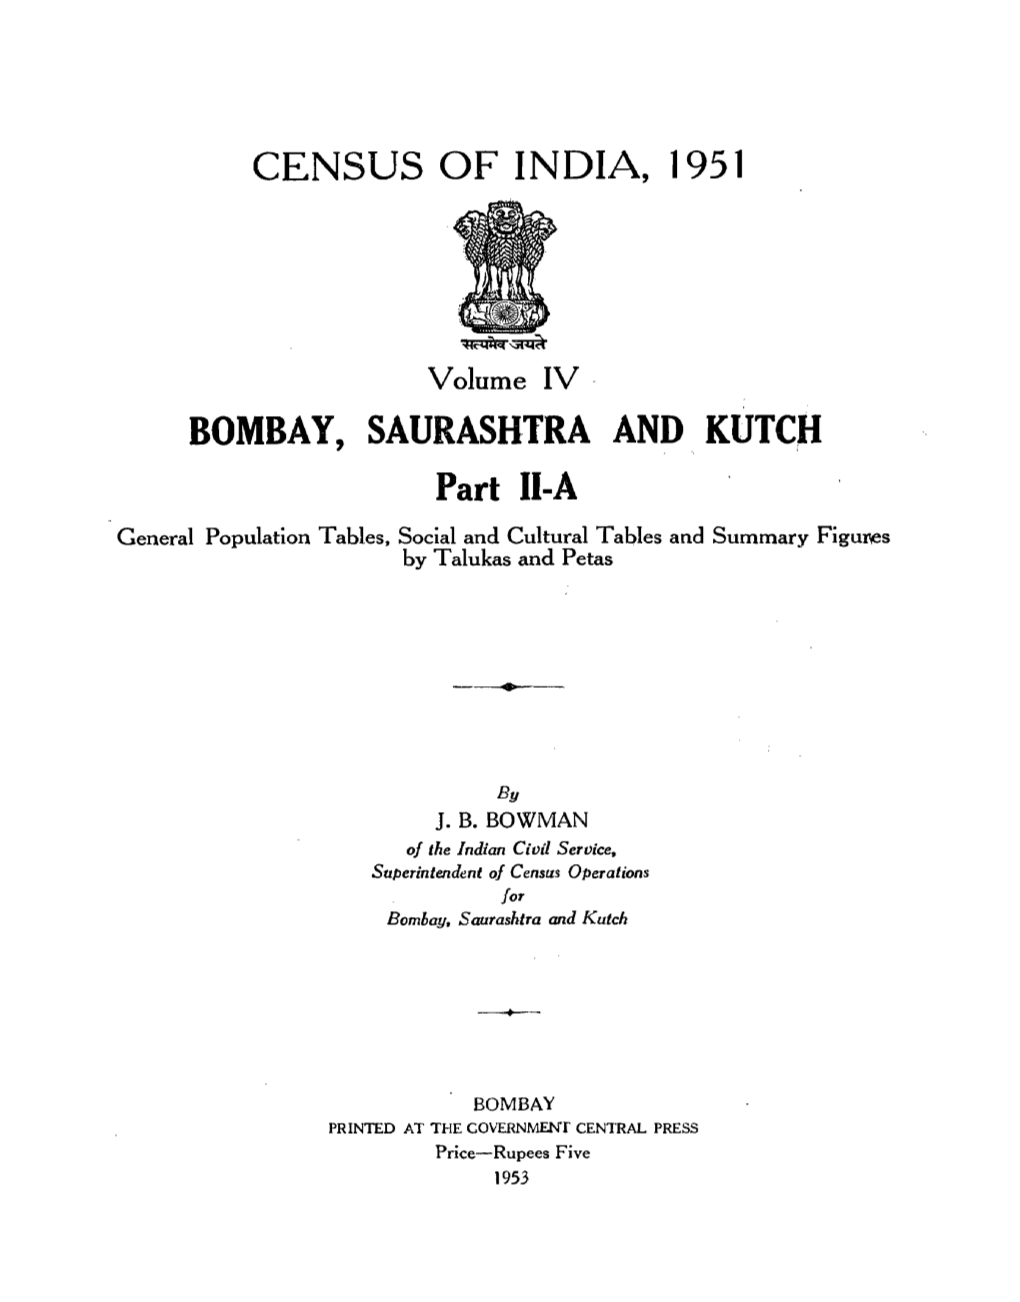 Bombay, Saurashtra and Kutch, Part II-A, Vol-IV